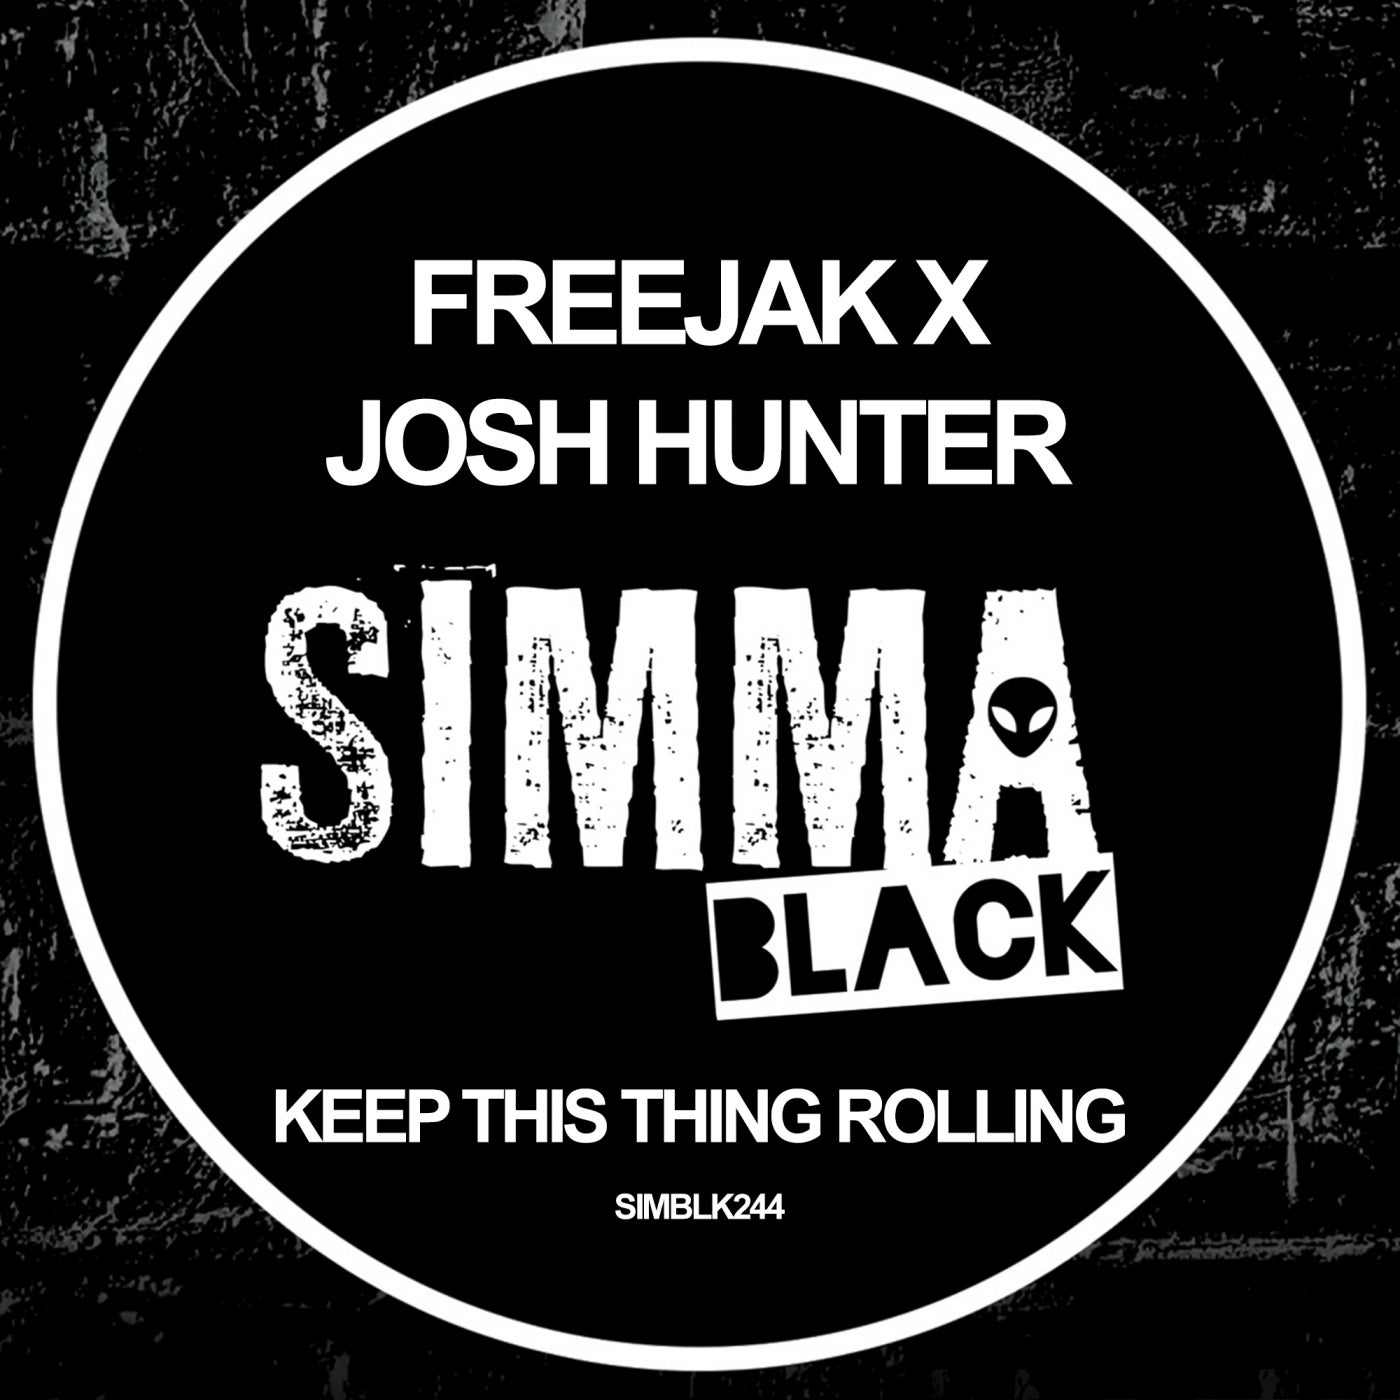 Freejak, Josh Hunter - Keep This Thing Rolling (Original Mix)